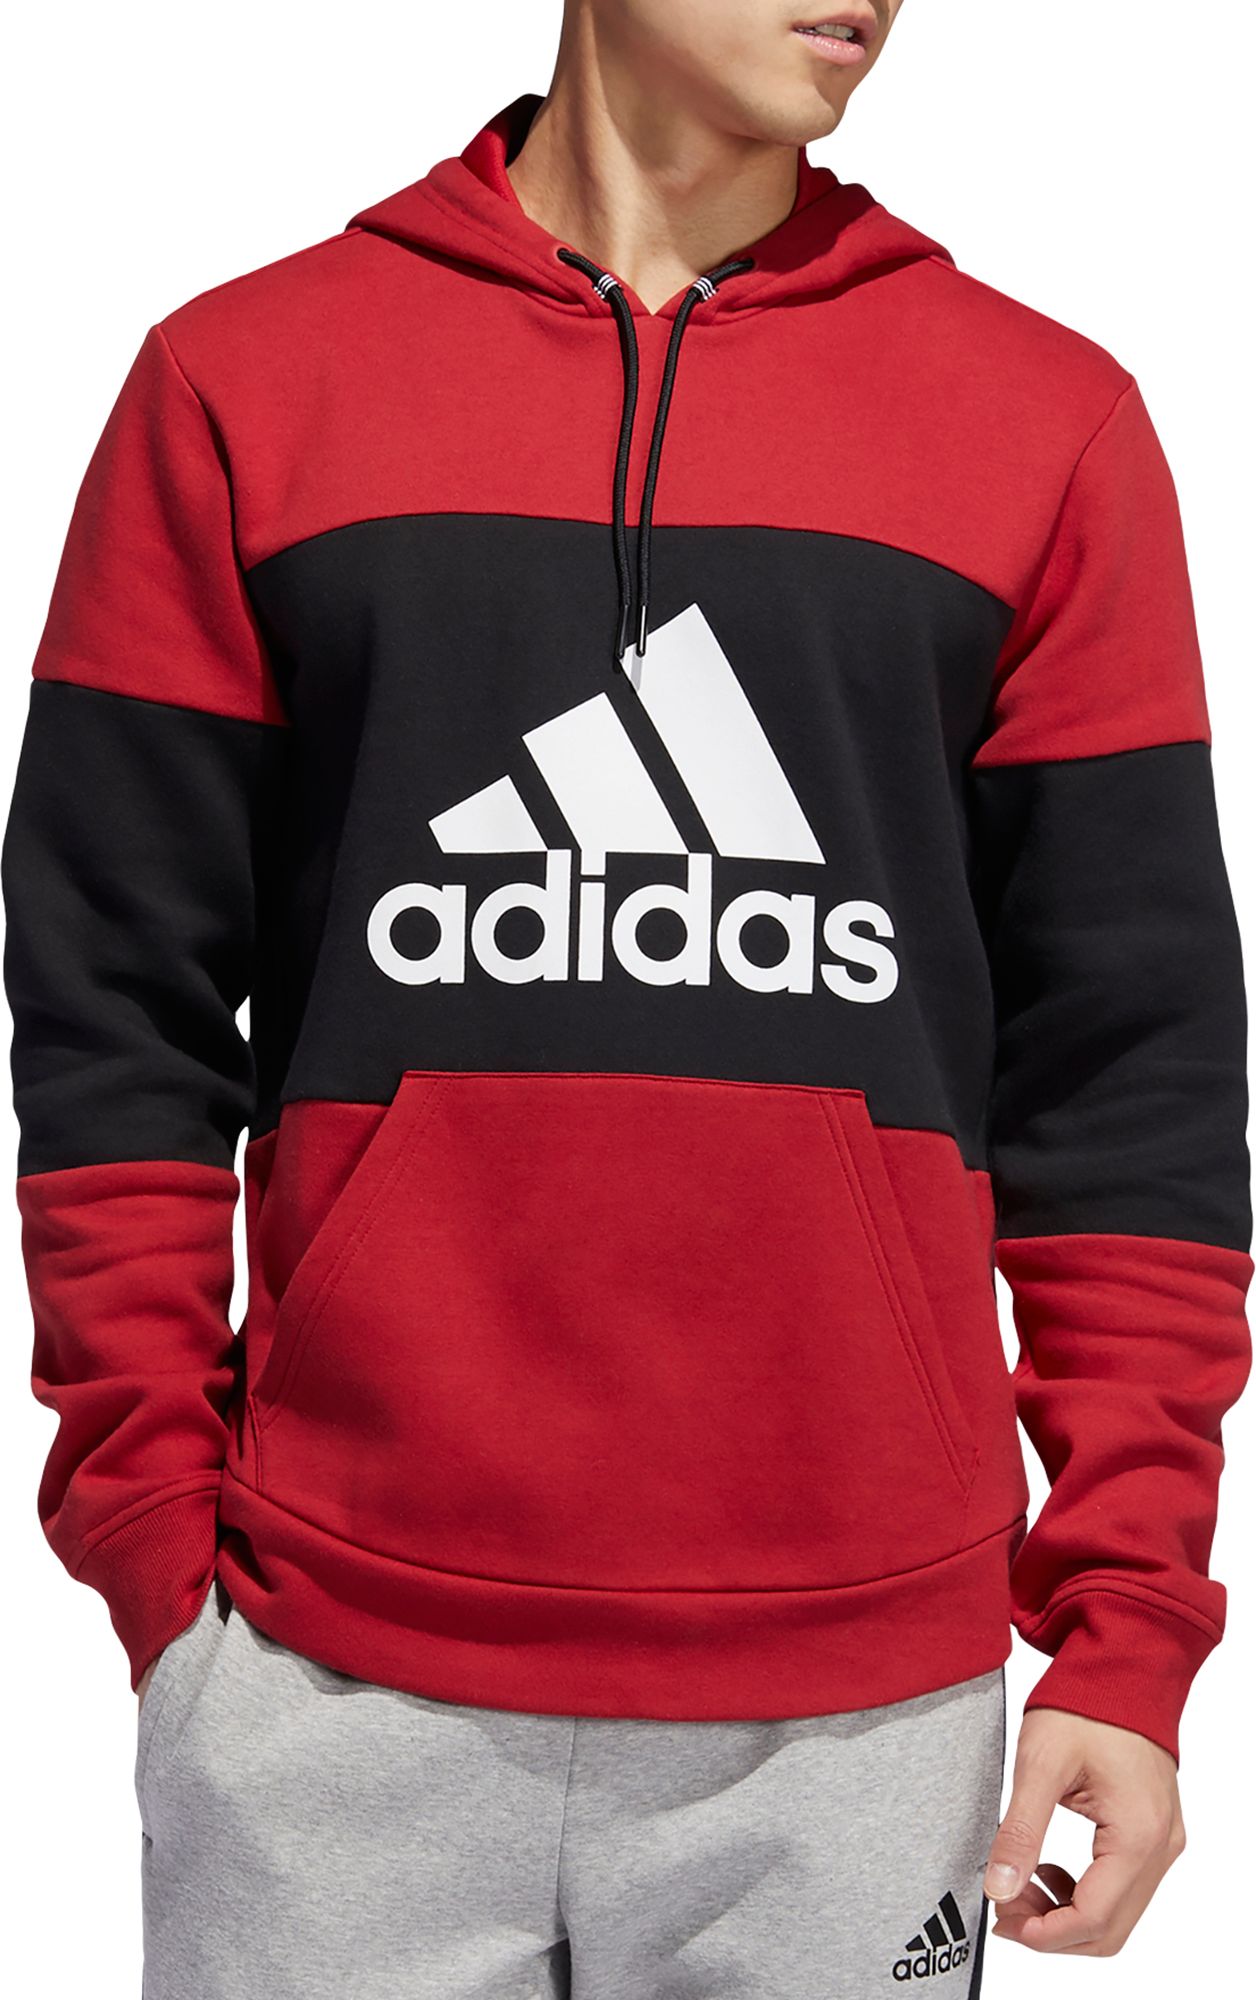 adidas hoodie black and red